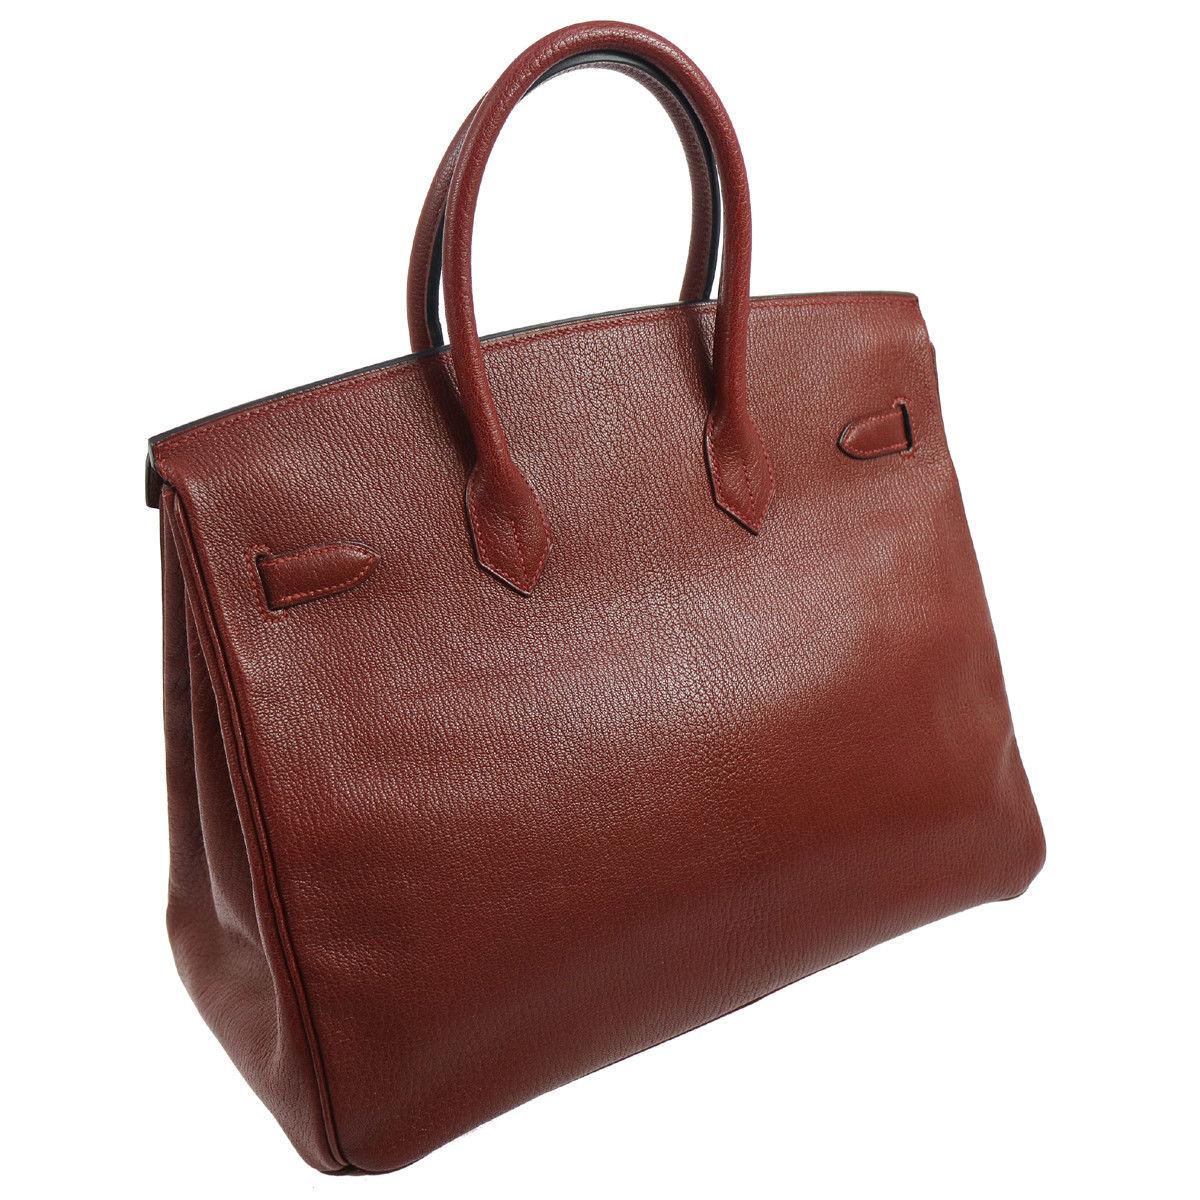 Brown Hermes Birkin 35 Bordeaux Wine Leather Top Handle Satchel Travel Shoulder Bag